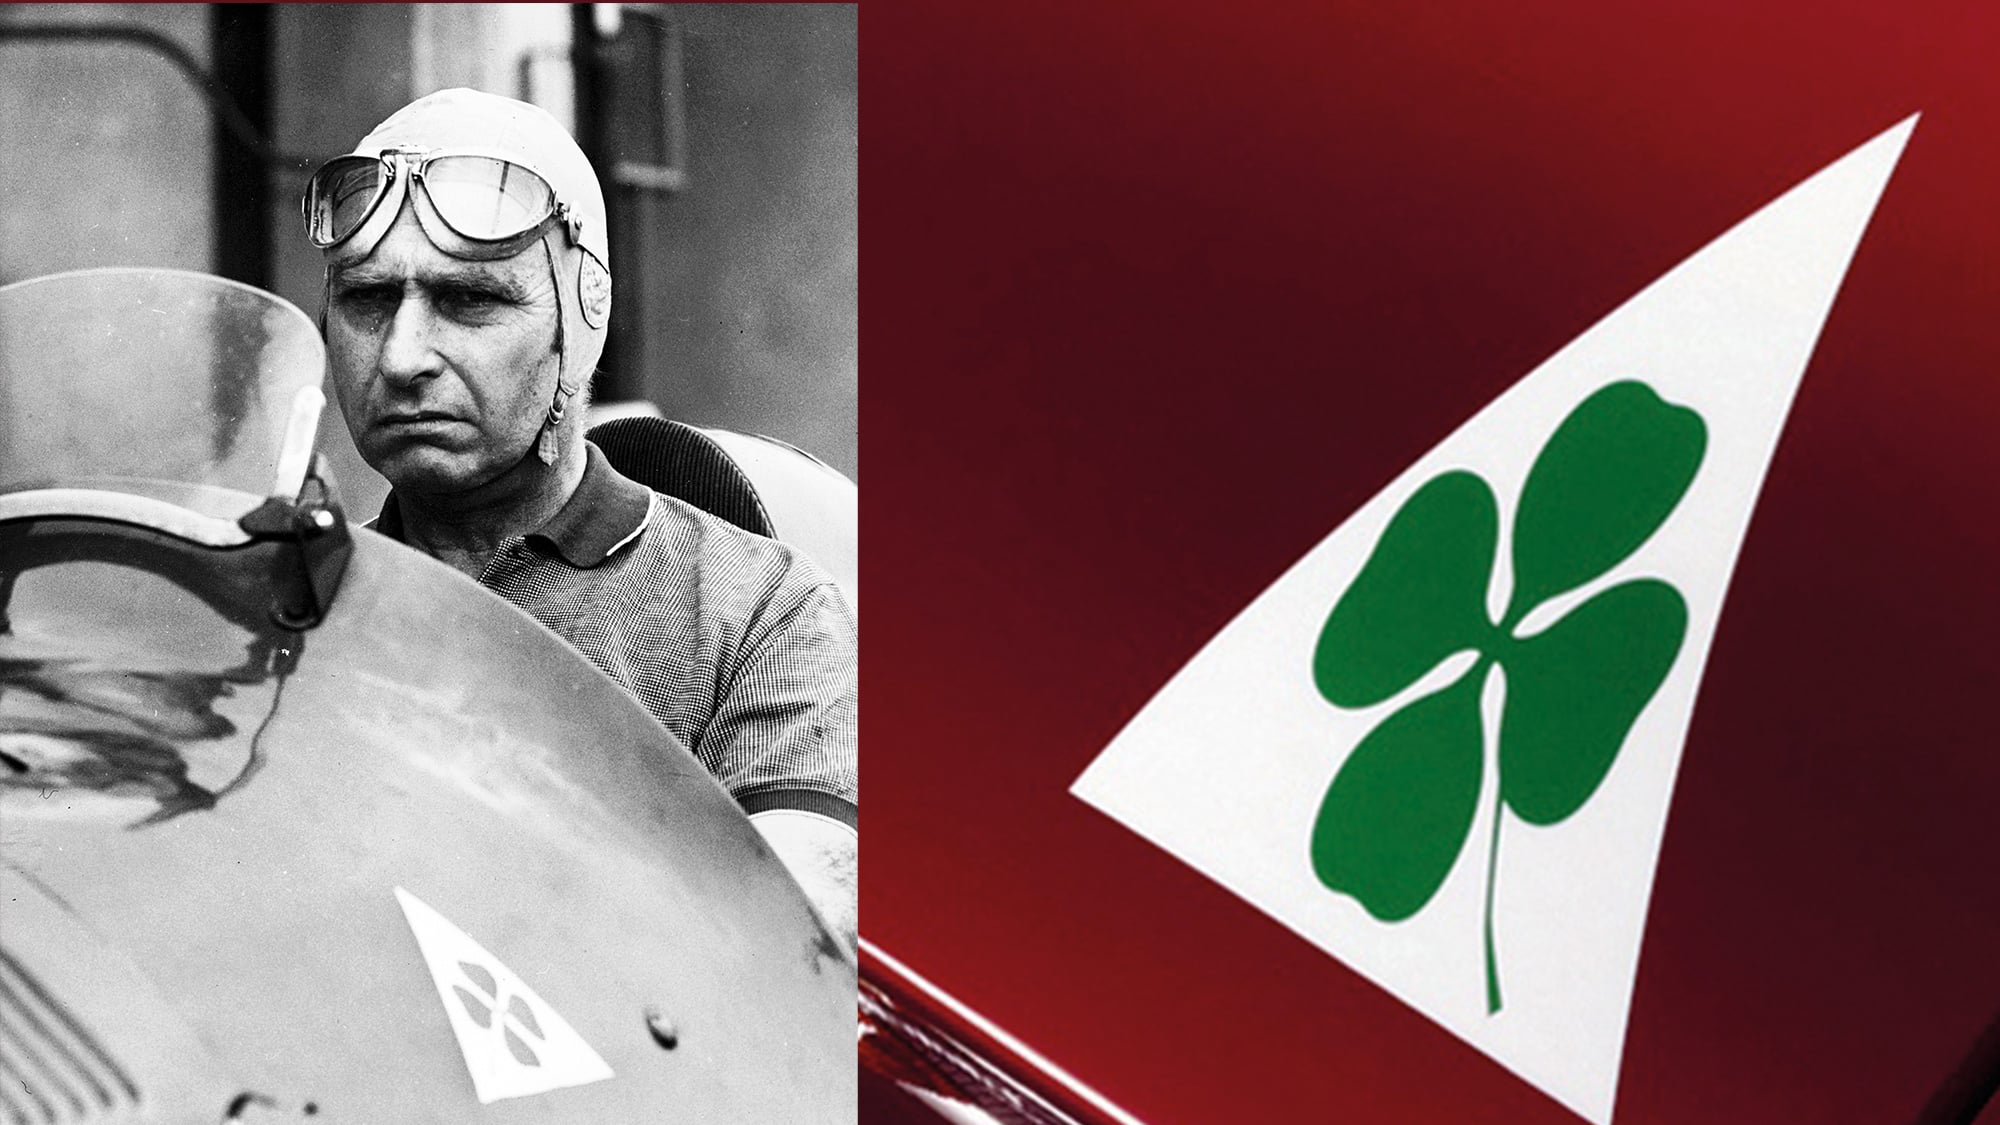 Alfa Romeo cloverleaf symbol and Juan Manuel Fangio